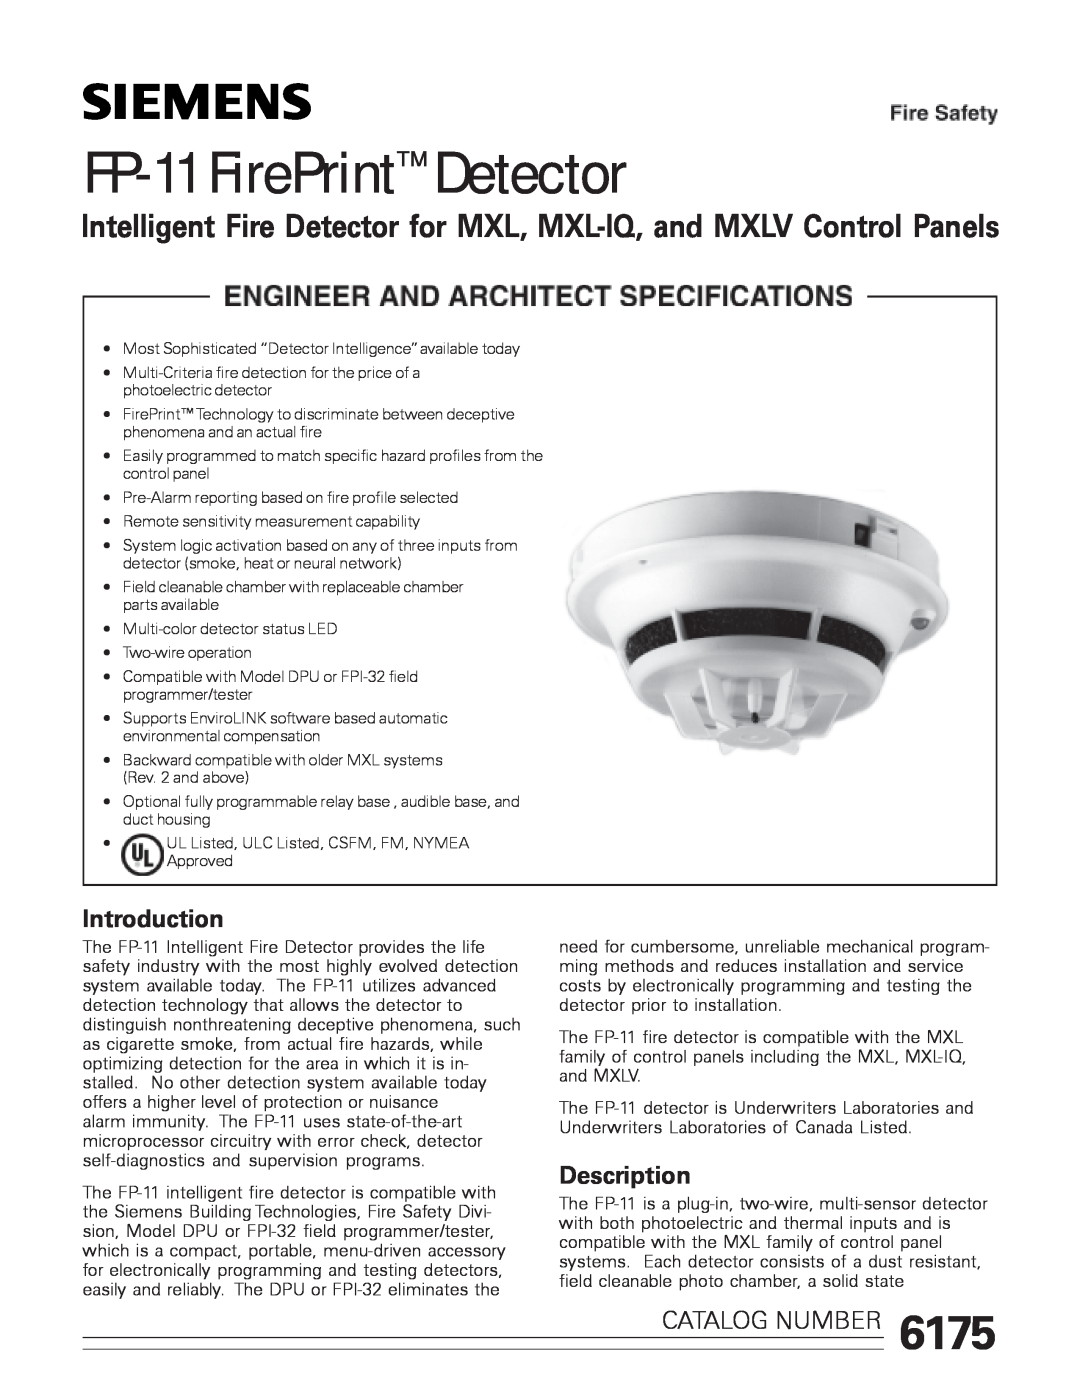 Siemens manual Introduction, Description, FP-11FirePrint Detector, Catalog Number 